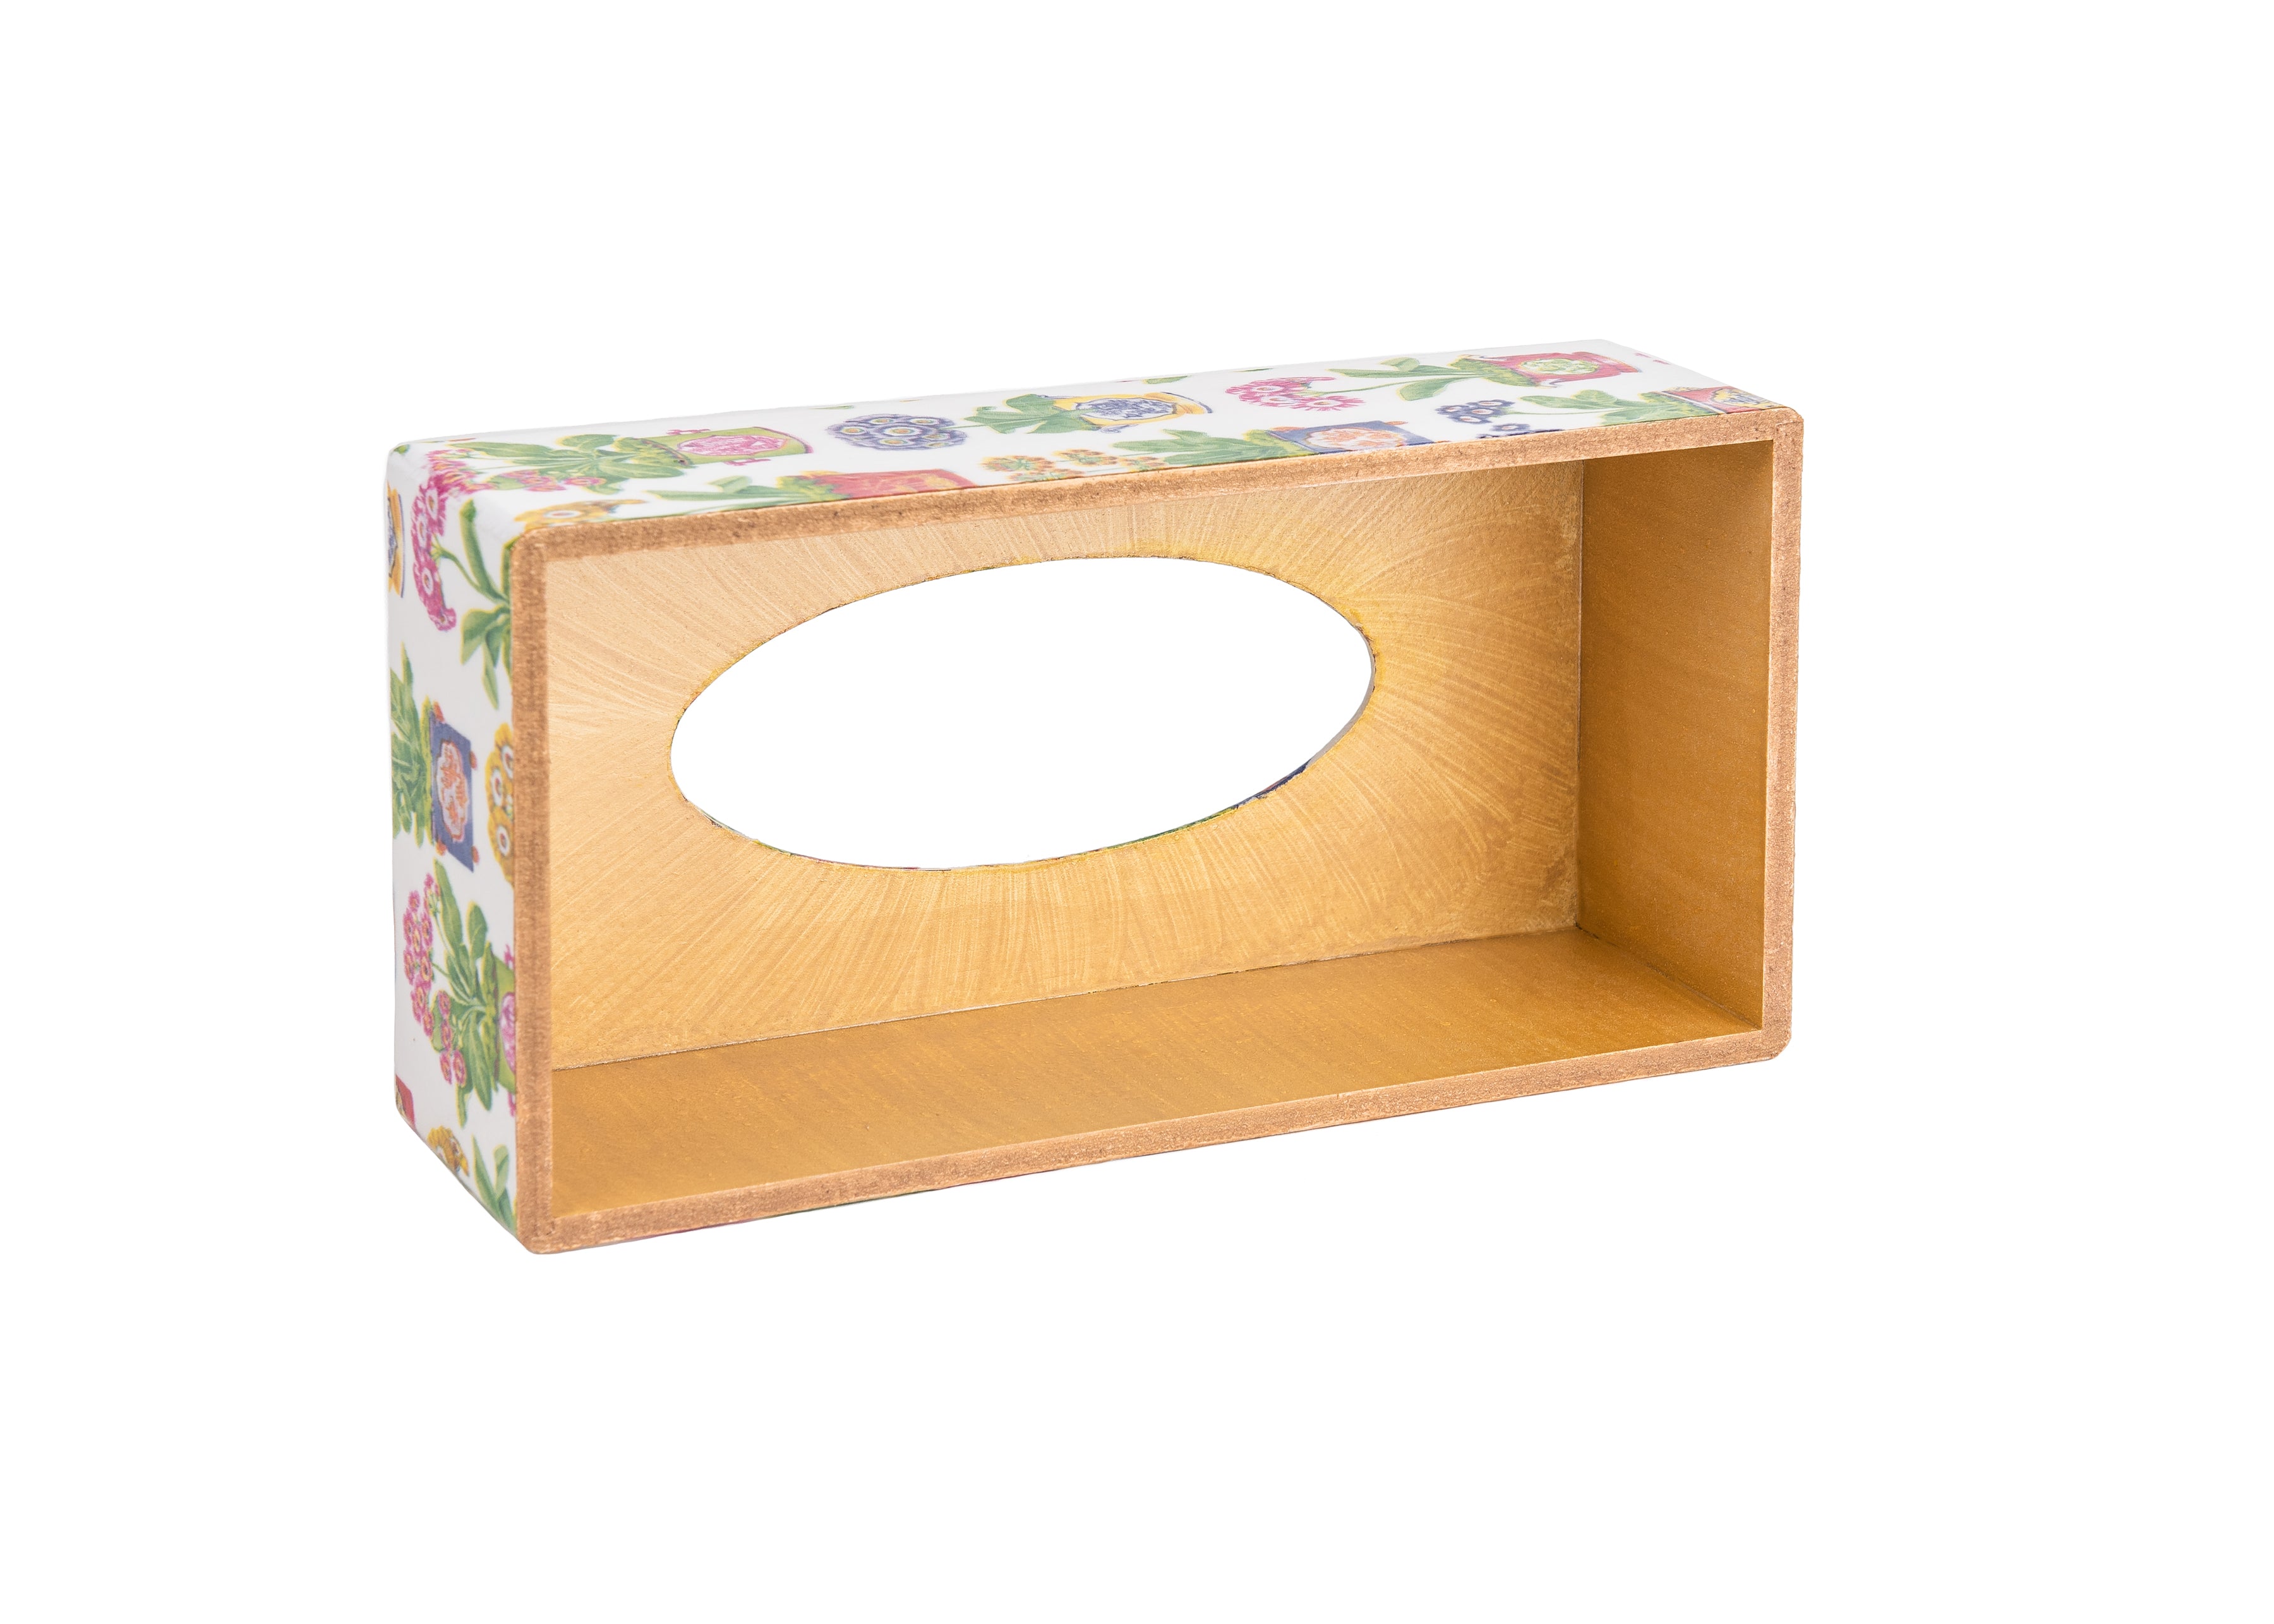 Aqua Trees wooden rectangular tissue box cover